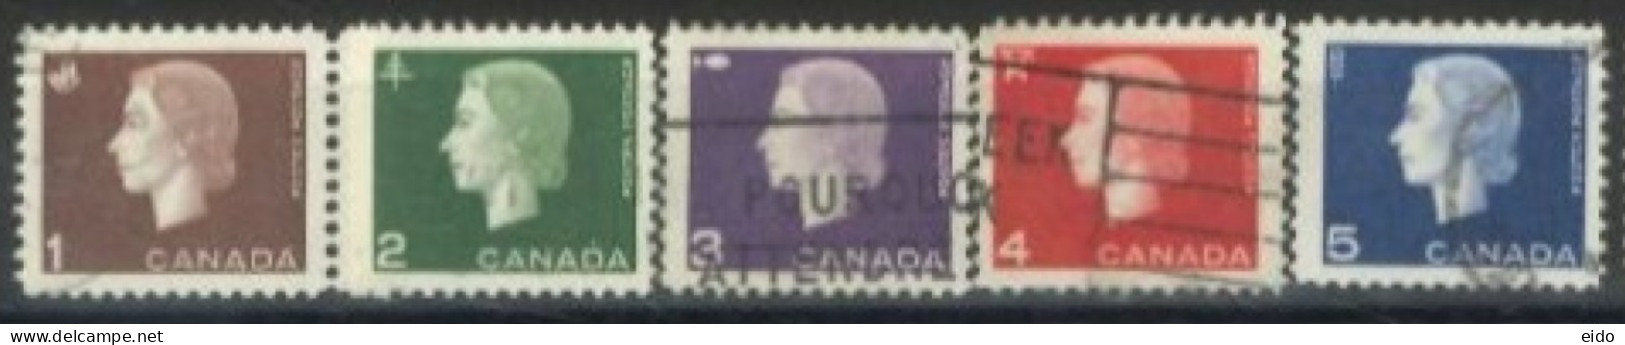 CANADA - 1962, QUEEN ELIZABETH II STAMPS & DIFFERENT SYMBOLS COMPLETE SET OF 5, USED. - Usati